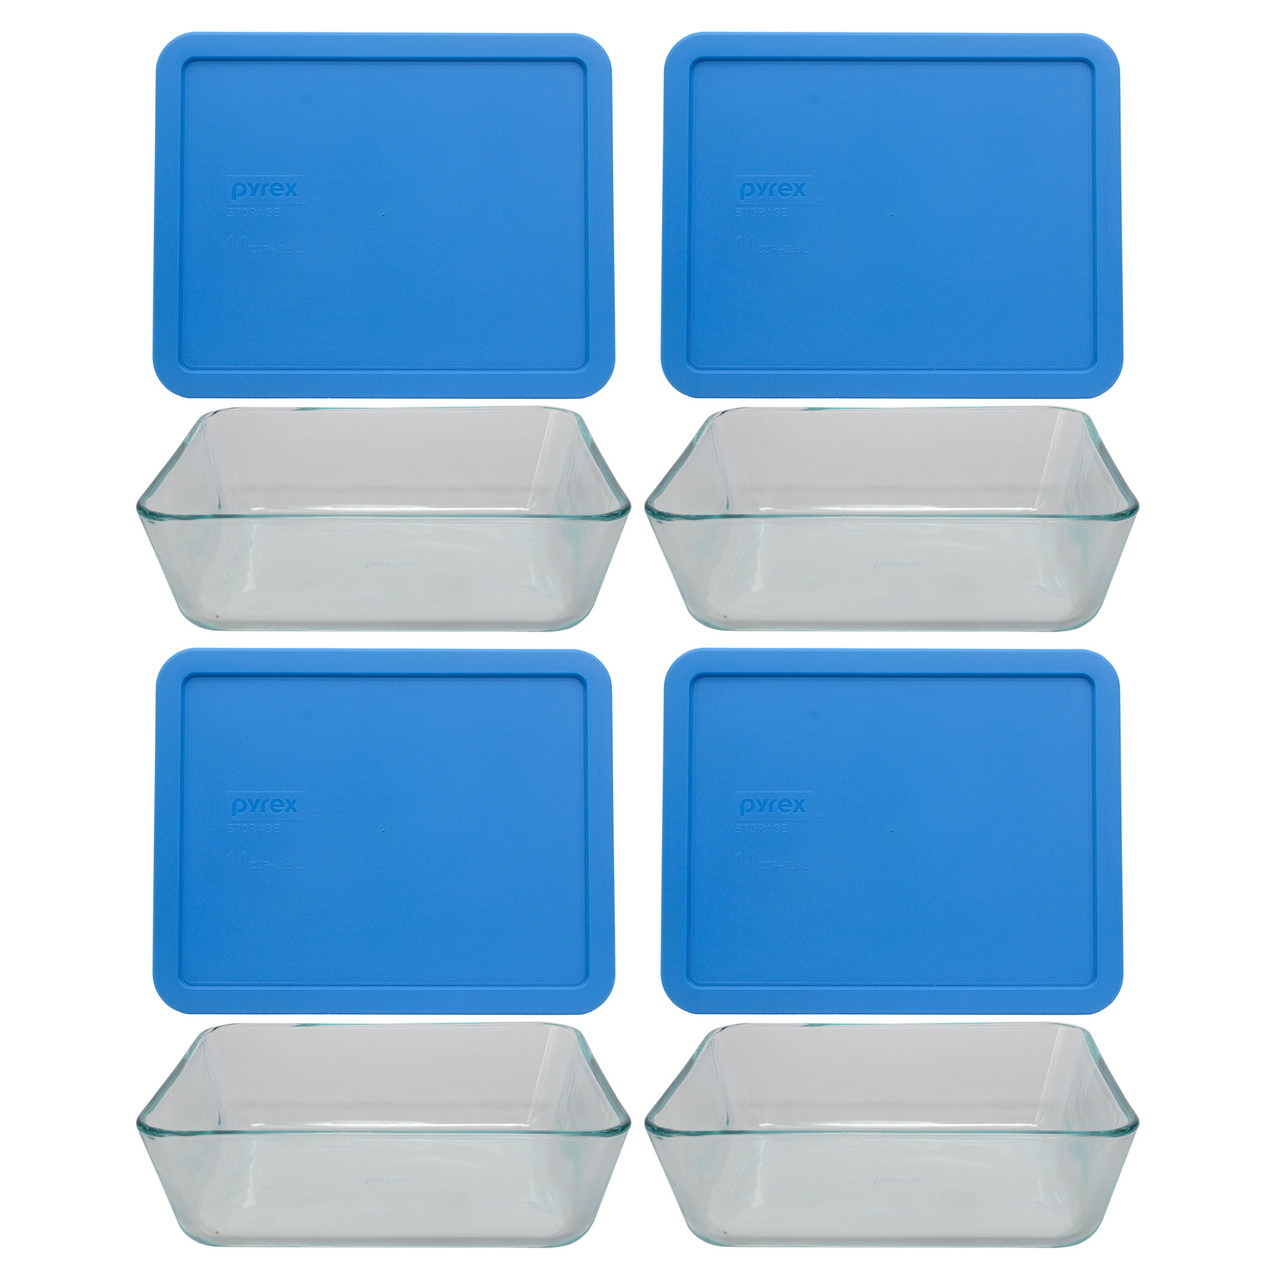 Pyrex Simply Store Rectangular Glass Food Storage Dish, 11-Cup